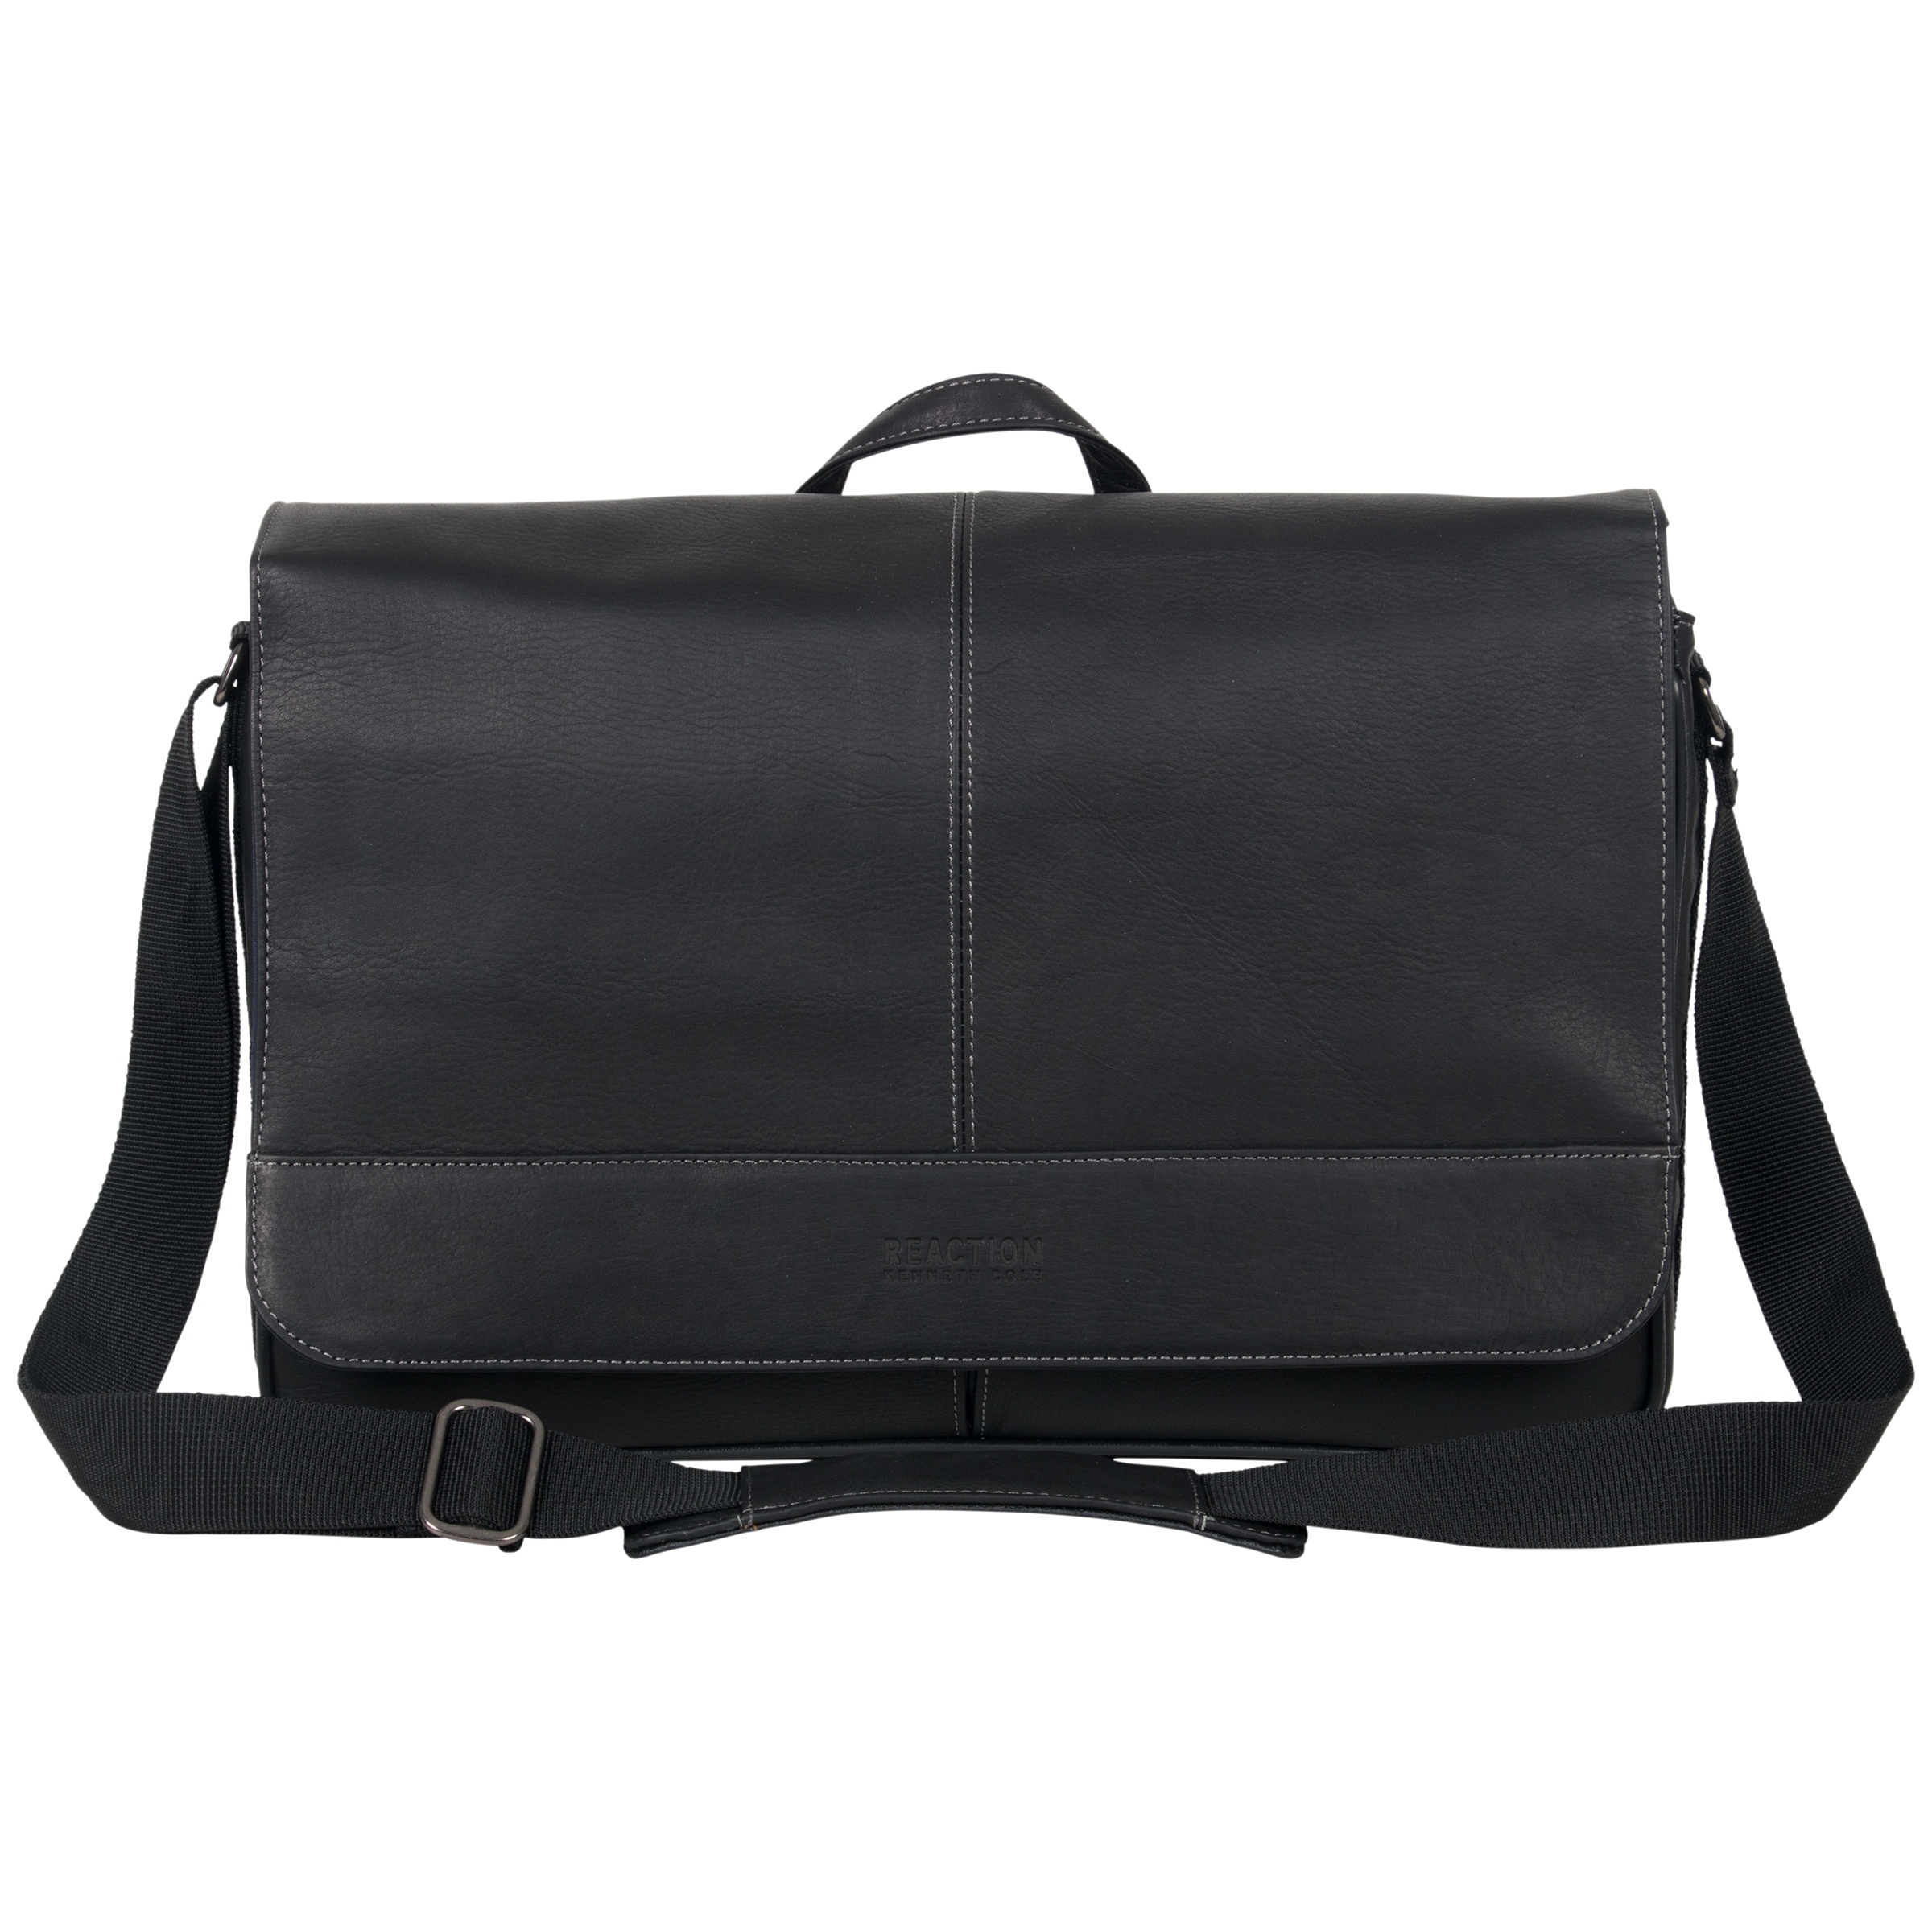 Kenneth Cole Reaction Leather Laptop Bag 528774 for sale online | eBay